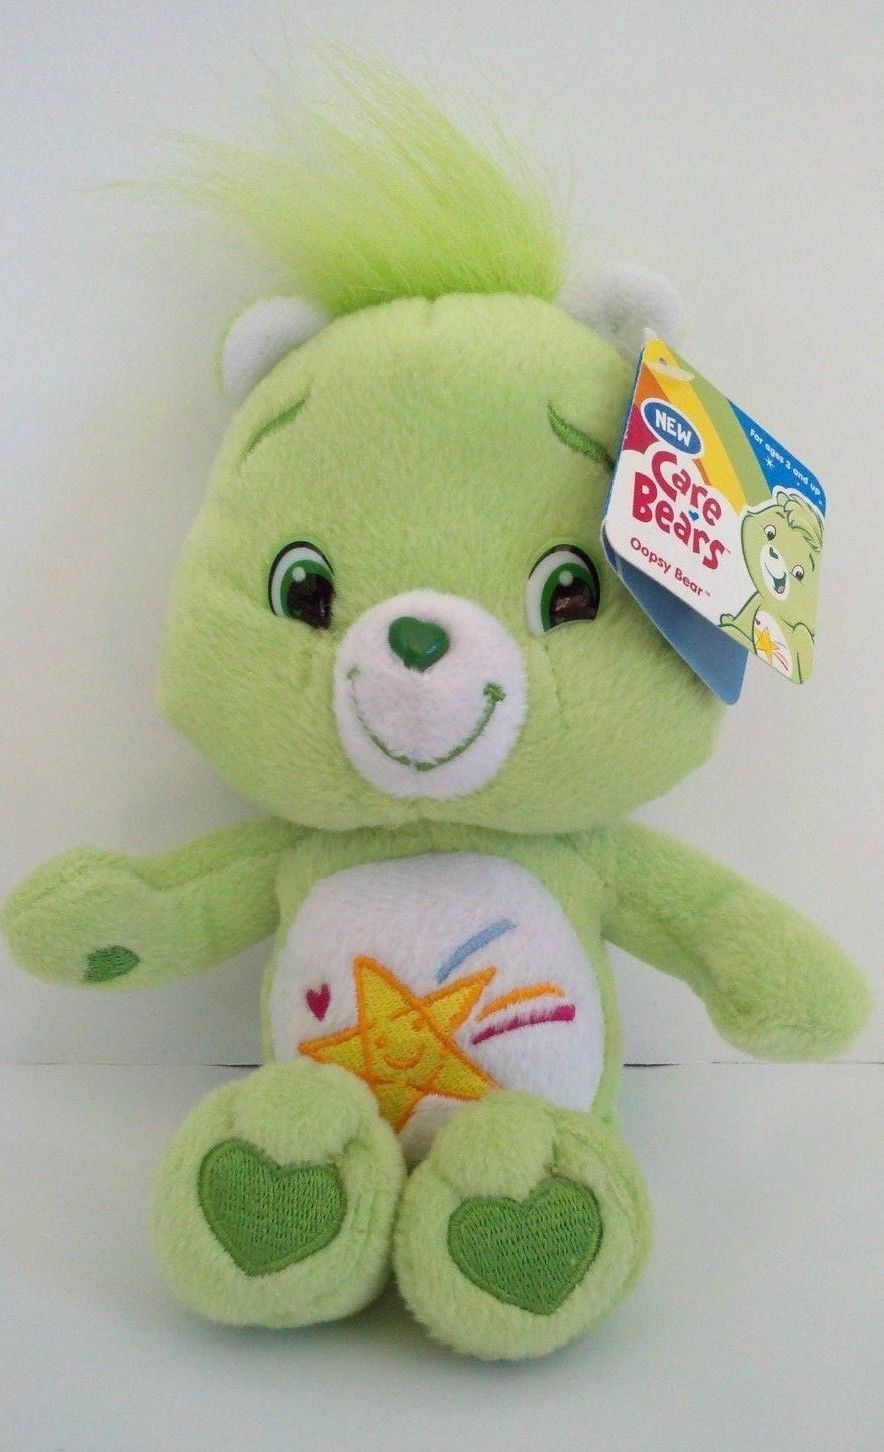 2007 Care Bears Oopsy Green Soft Plush Bean Bag Stuffed Animal Doll Toy 8